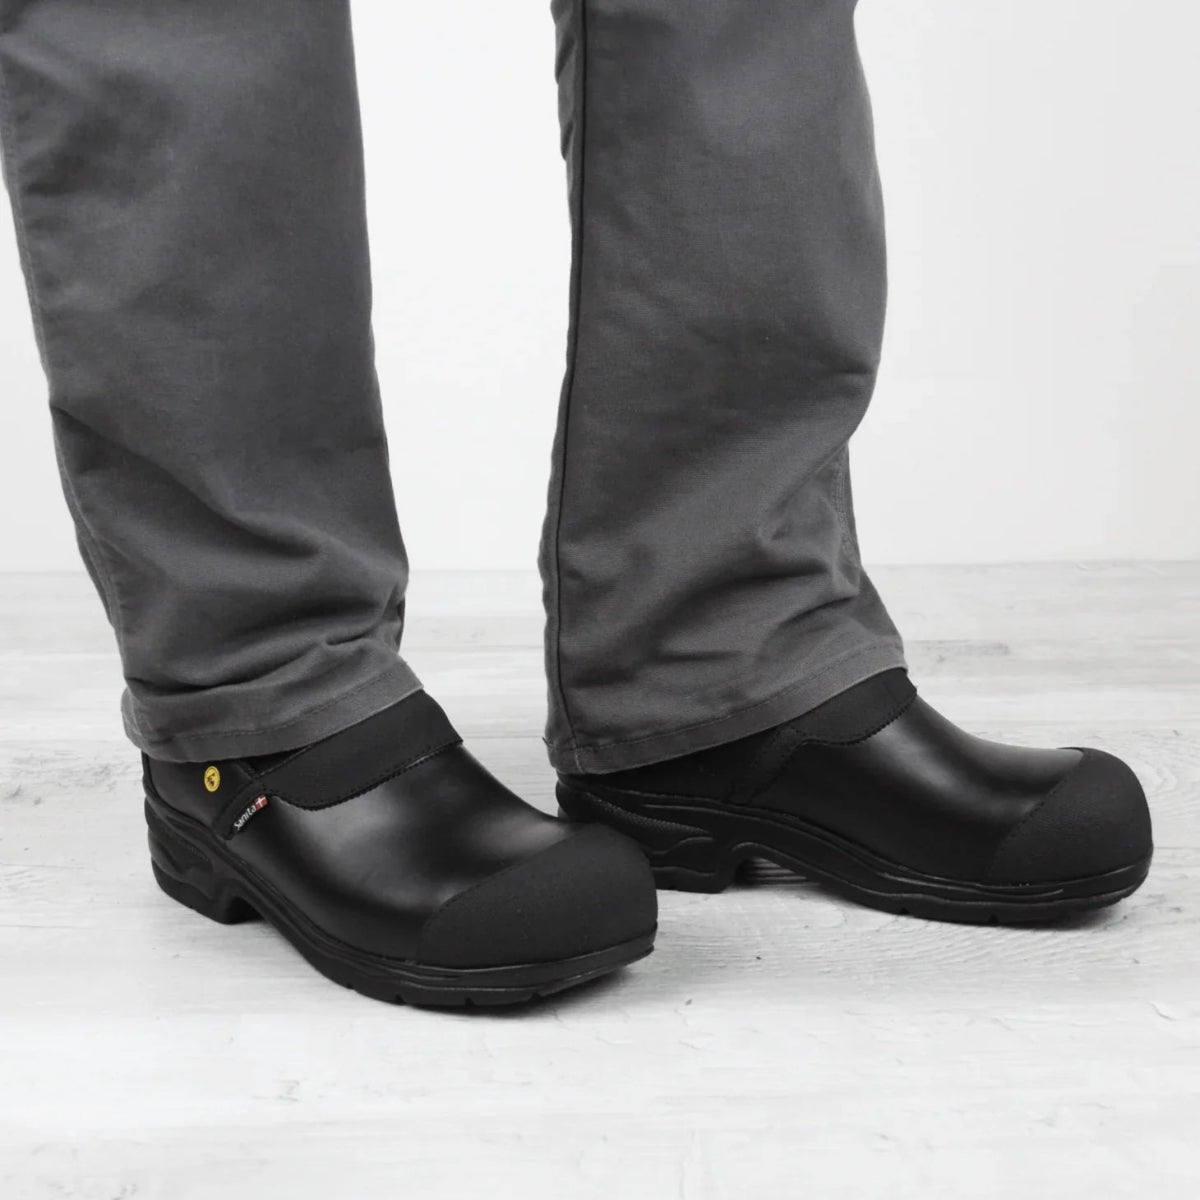 SANITA PRO LIGHT S3 CLOG UNISEX IN BLACK - TLW Shoes